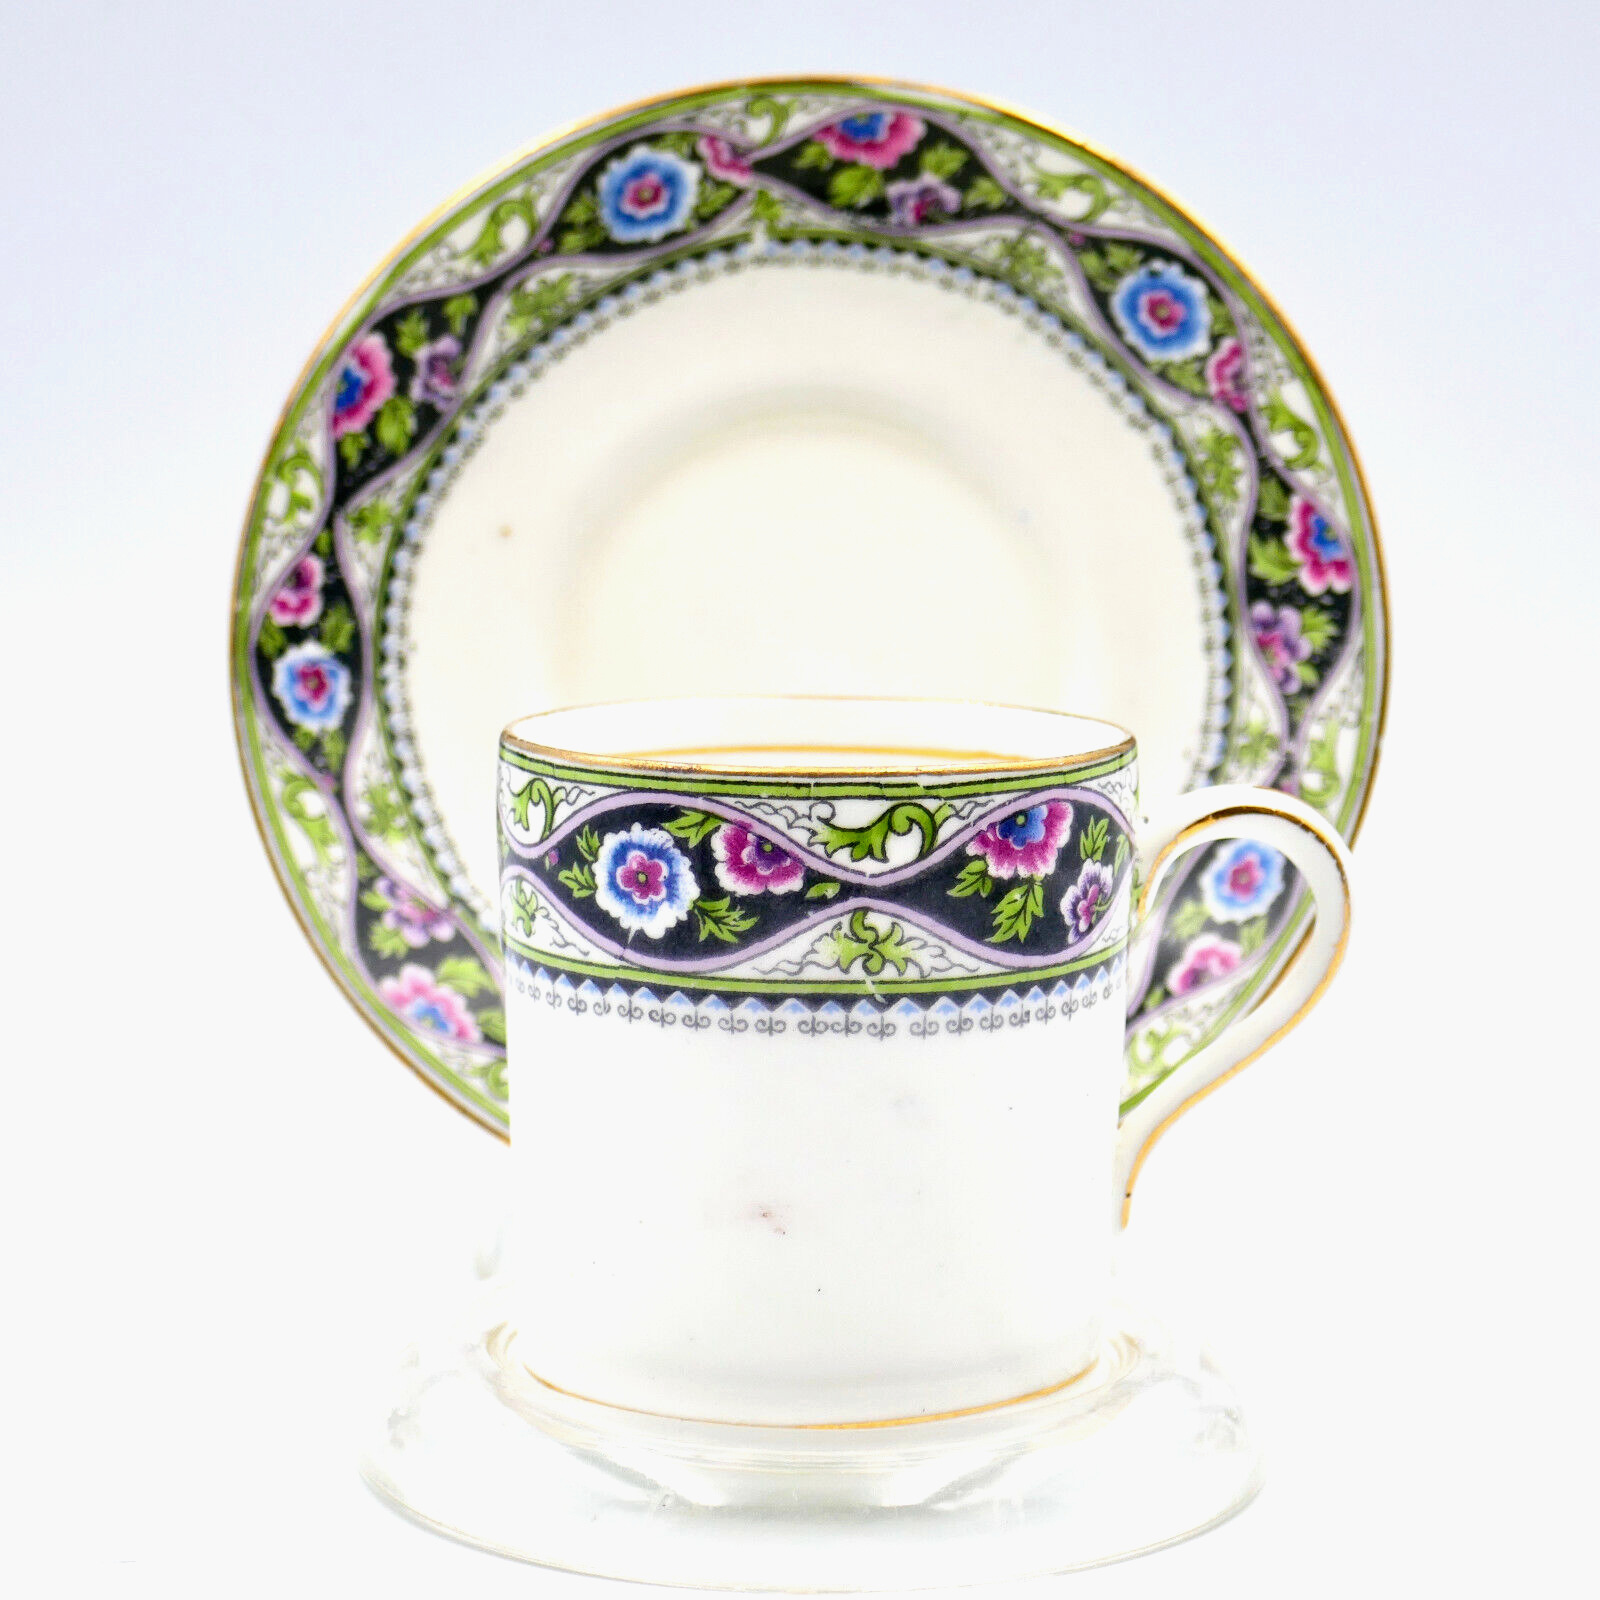 Paragon Star China Demitasse Cup Saucer Art Deco Floral Porcelain Gold Antique